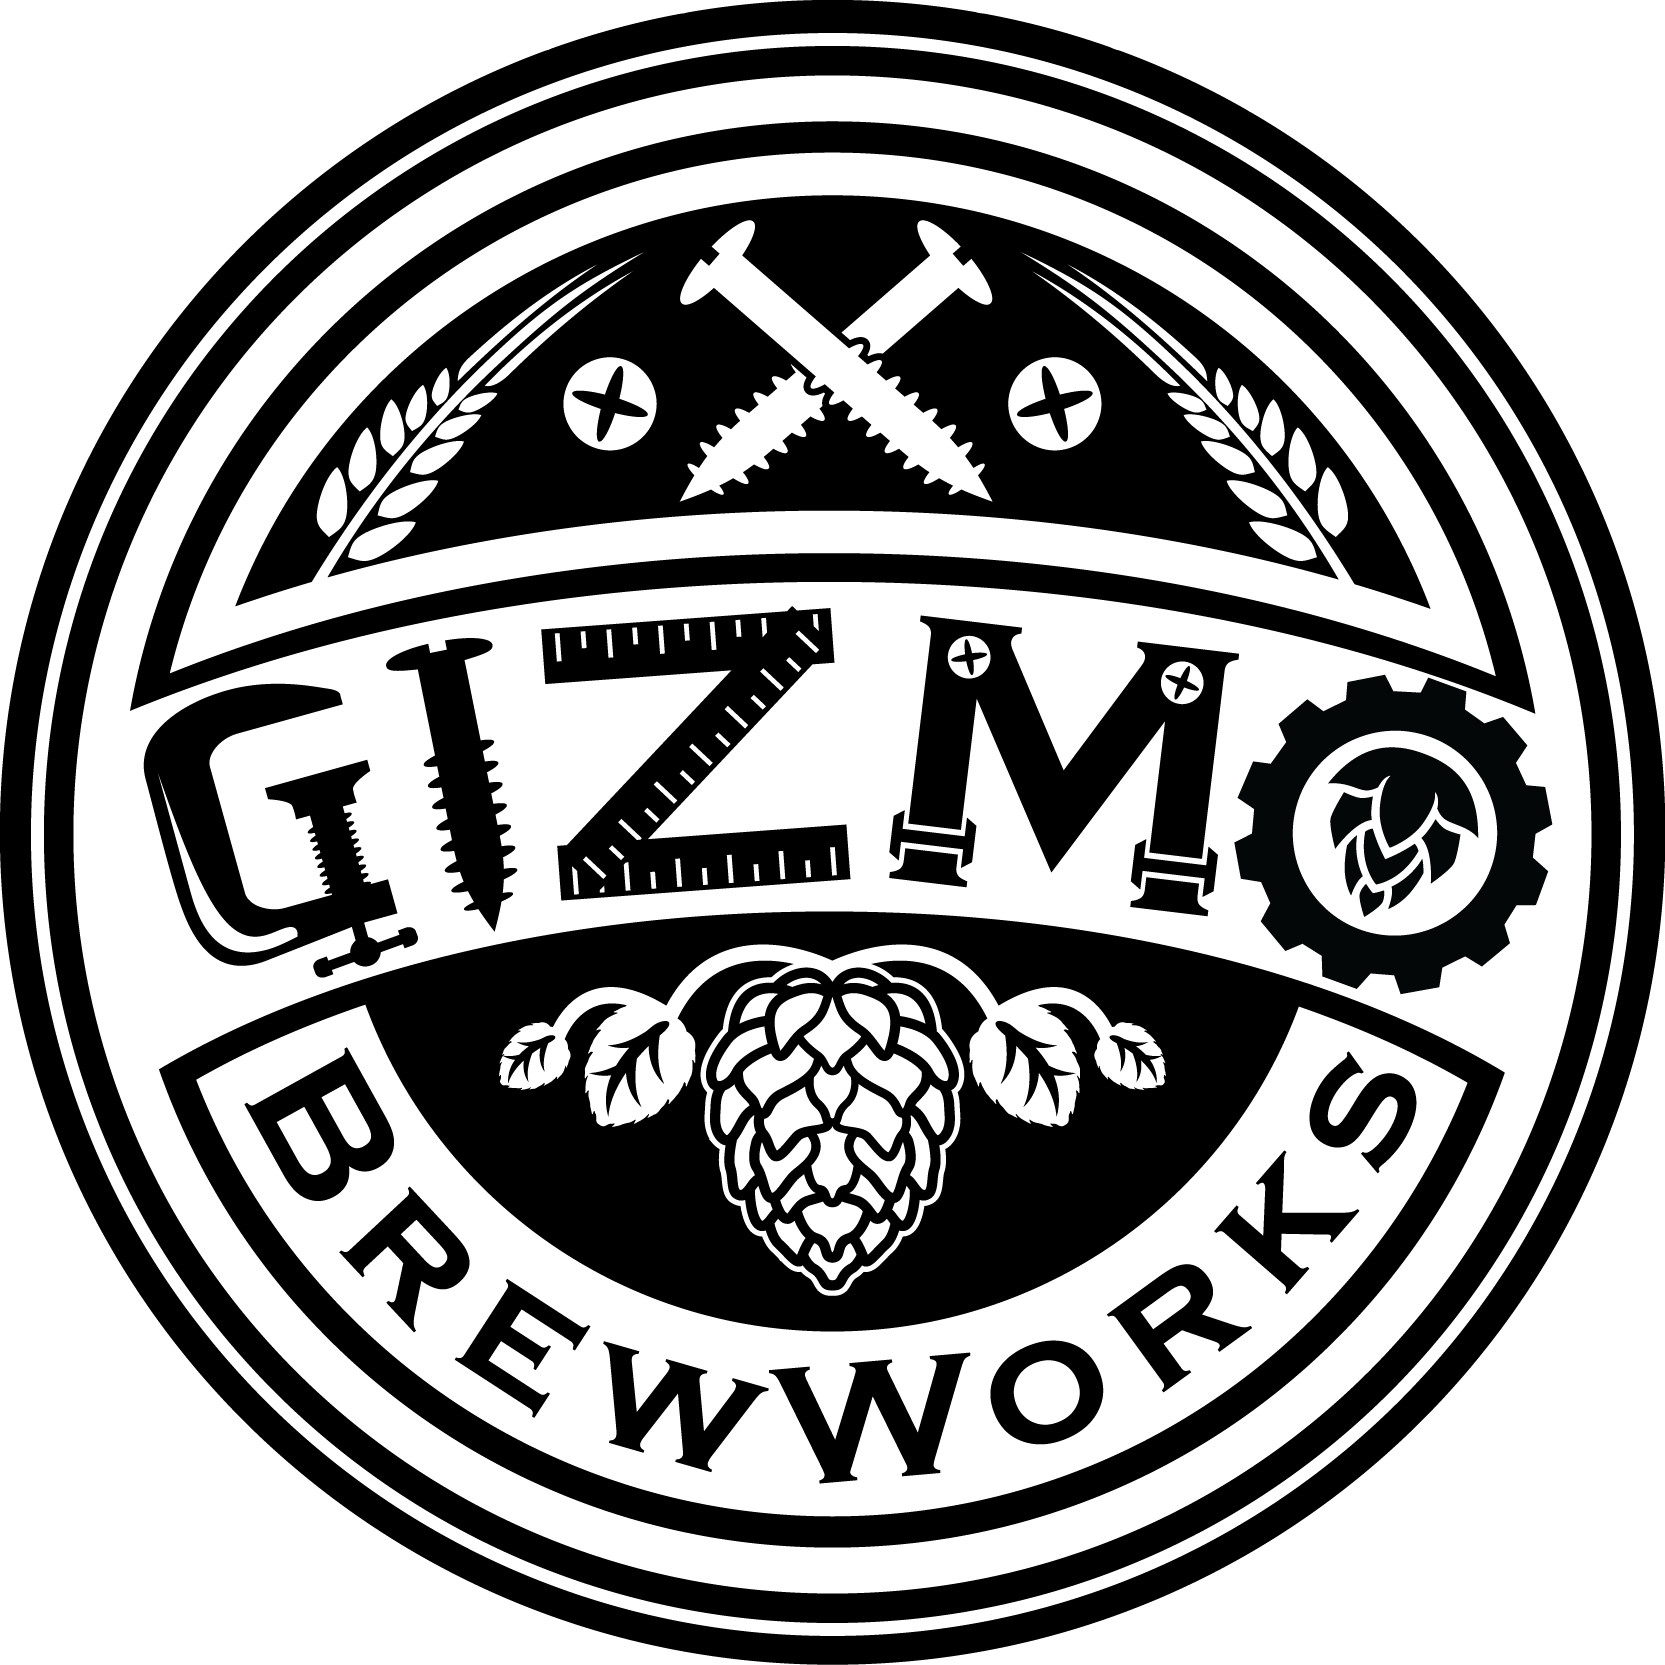 Black C in Circle Logo - Gizmo circle text inside, black – Gizmo Brew Works